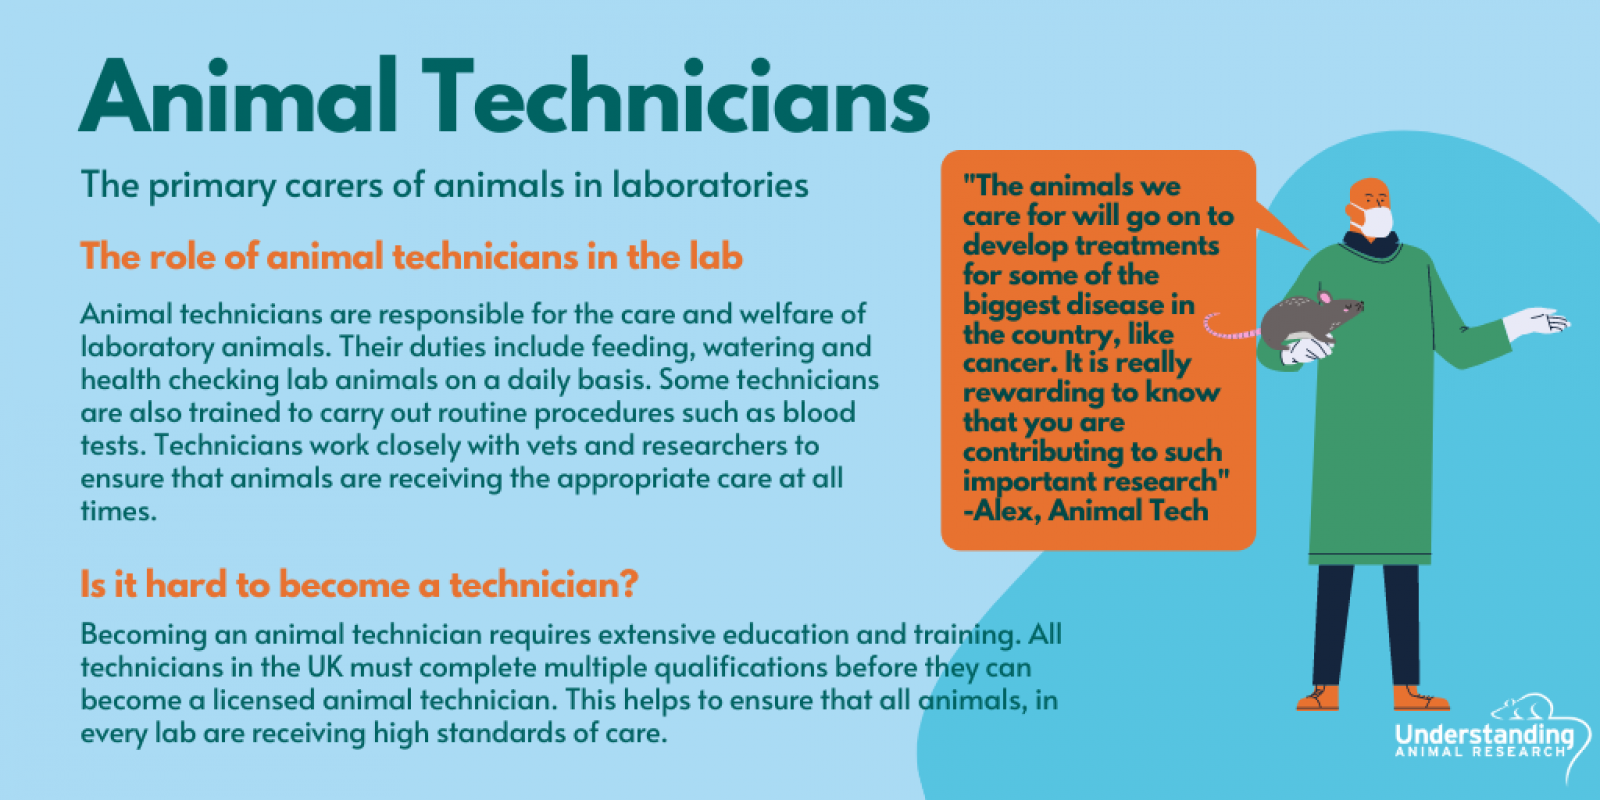 What do animal technicians do?